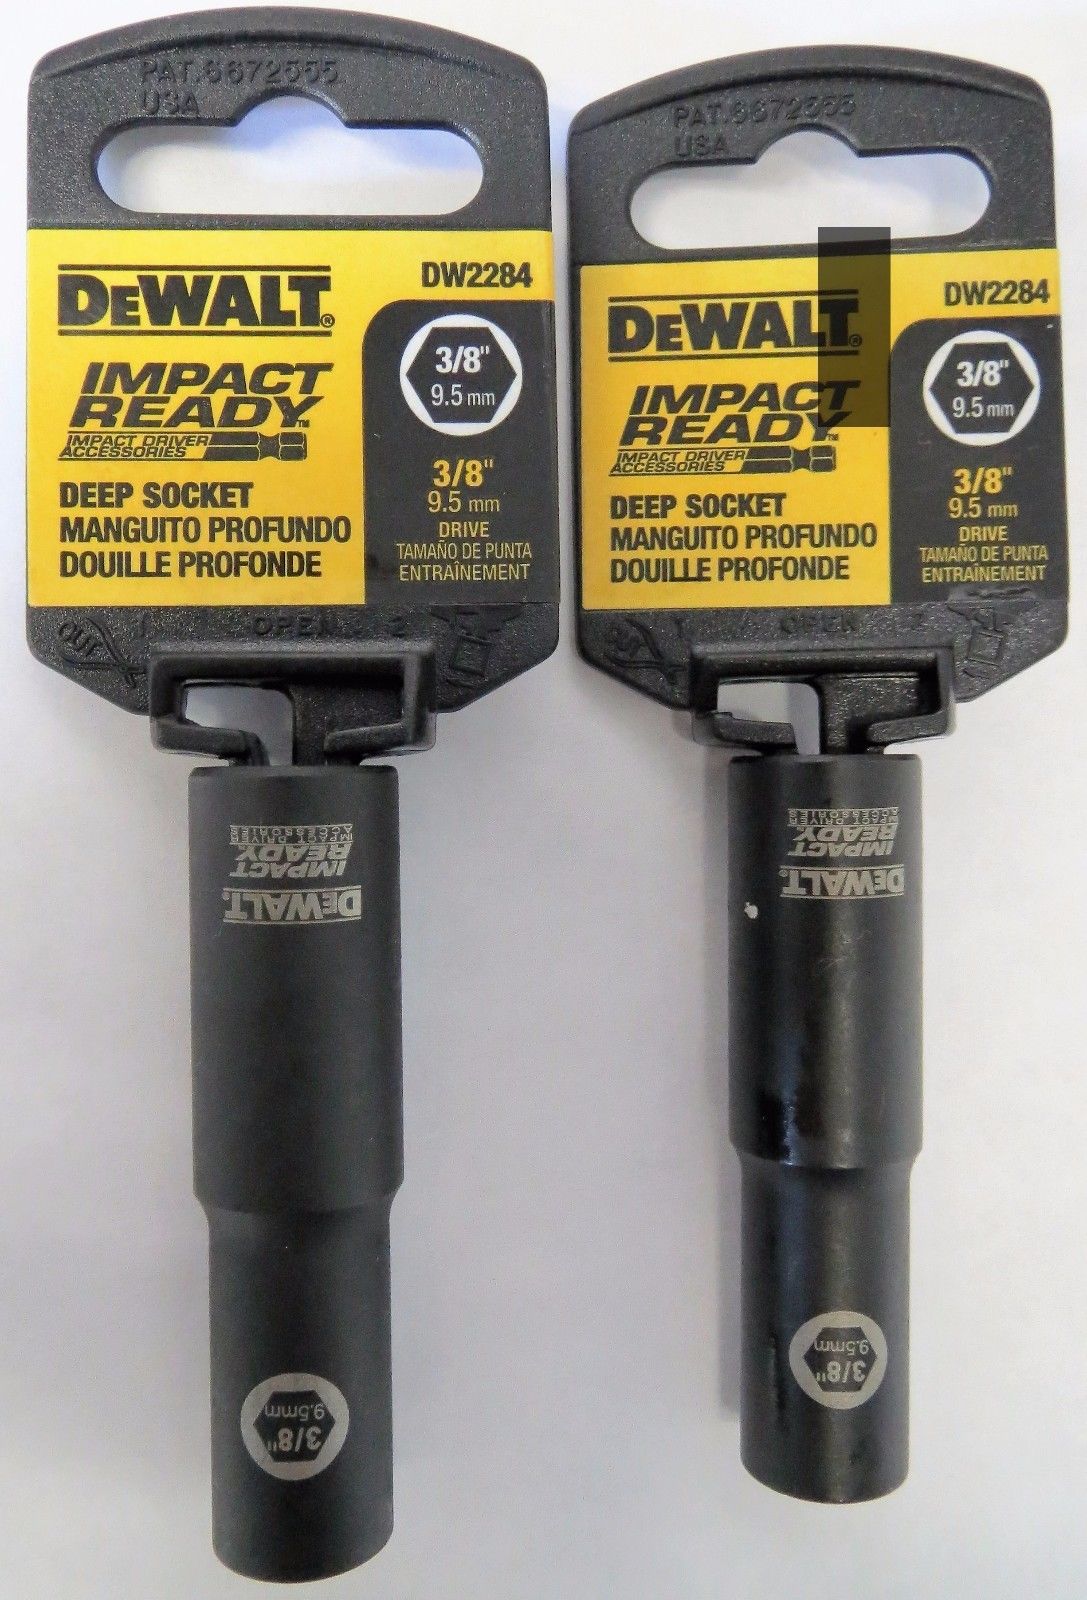 Dewalt DW2284 Impact Ready Deep Socket 3/8" 3/8 Dr (2pcs)